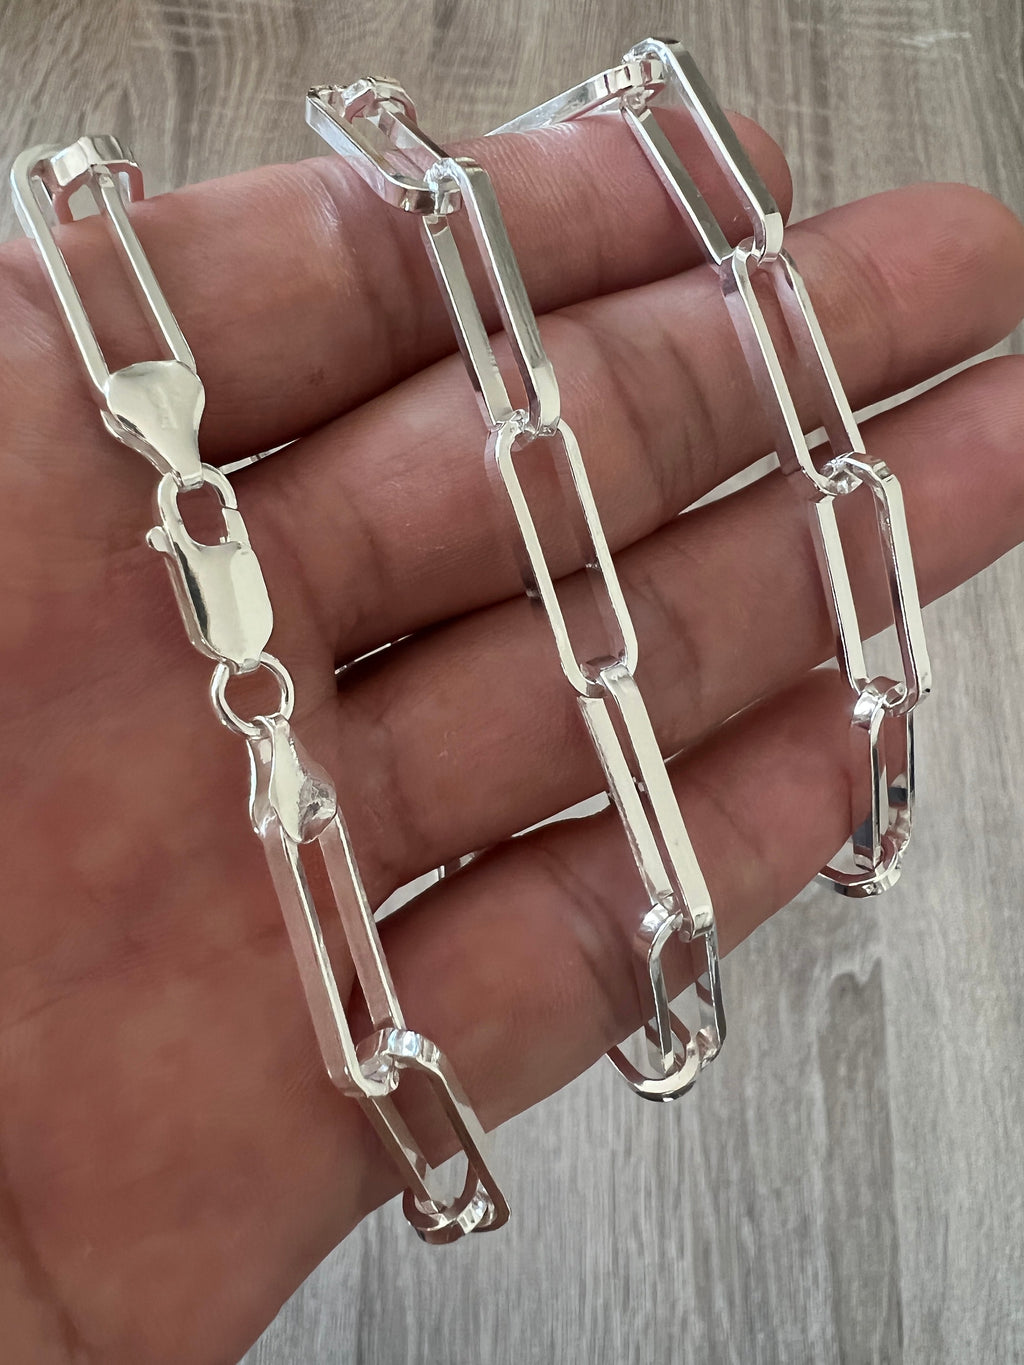 Silver chain Necklace,silver chain Necklace,silver link Necklace